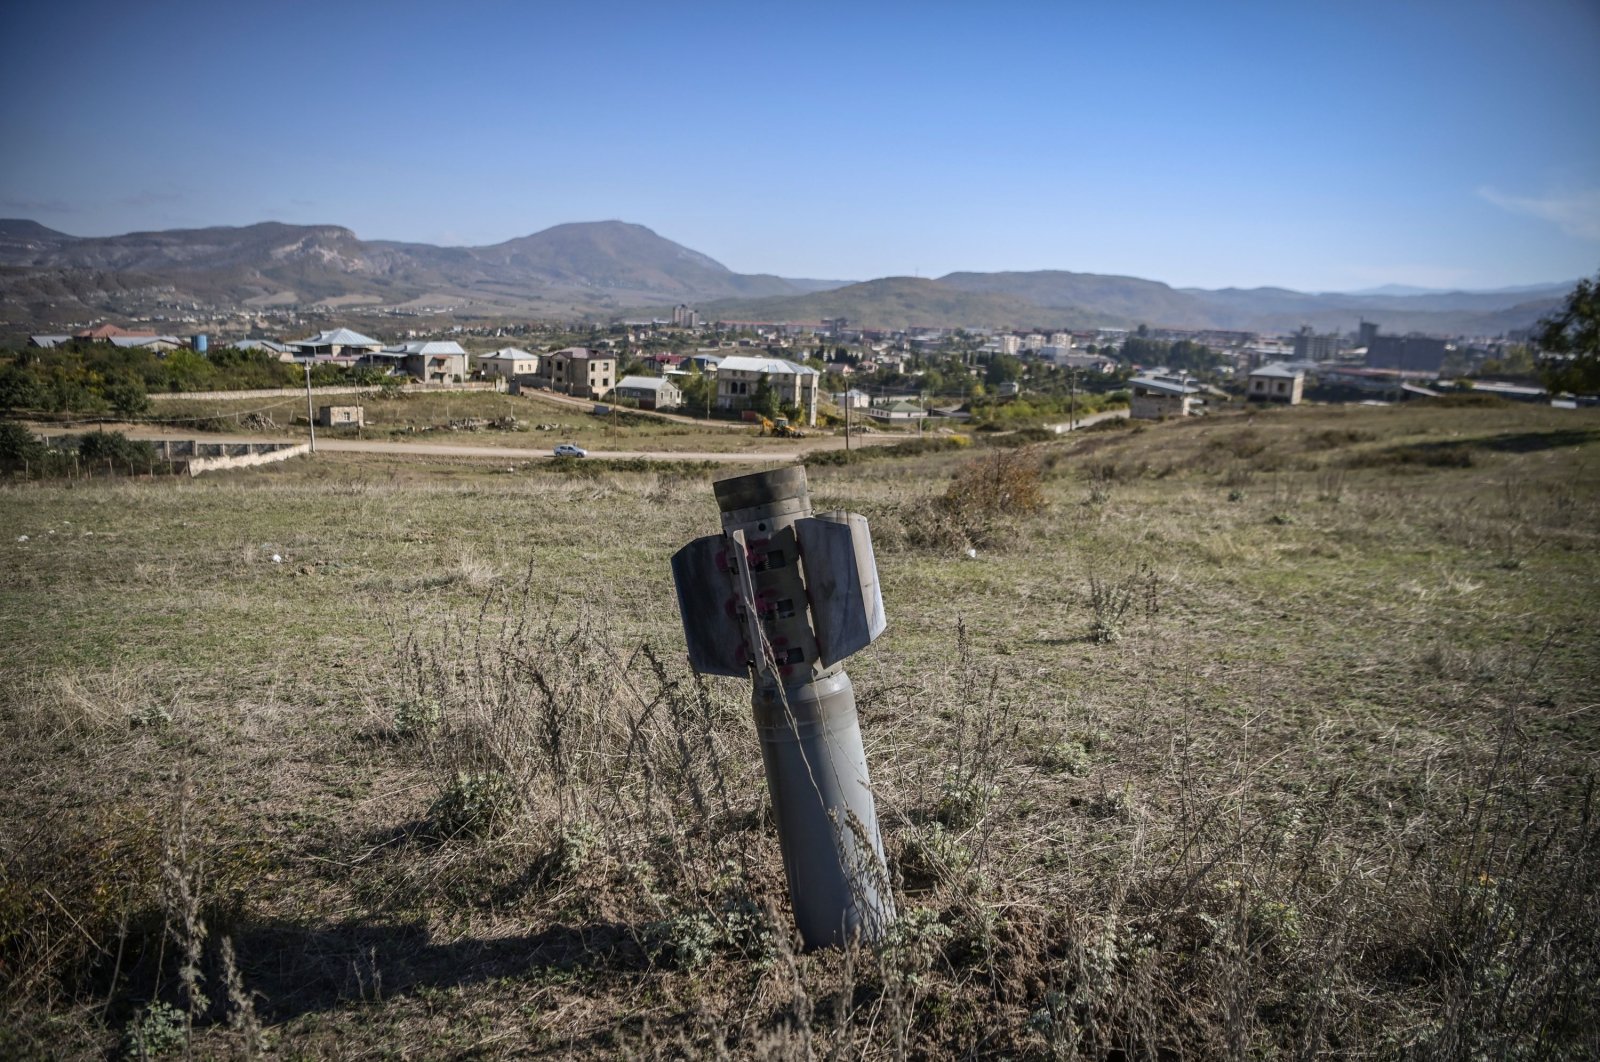 An unexploded BM-30 Smerch missile on the outskirts of Stepanakert (Khankendi), near the Armenia-occupied Nagorno-Karabakh, Azerbaijan, Oct. 12, 2020. (AFP Photo)